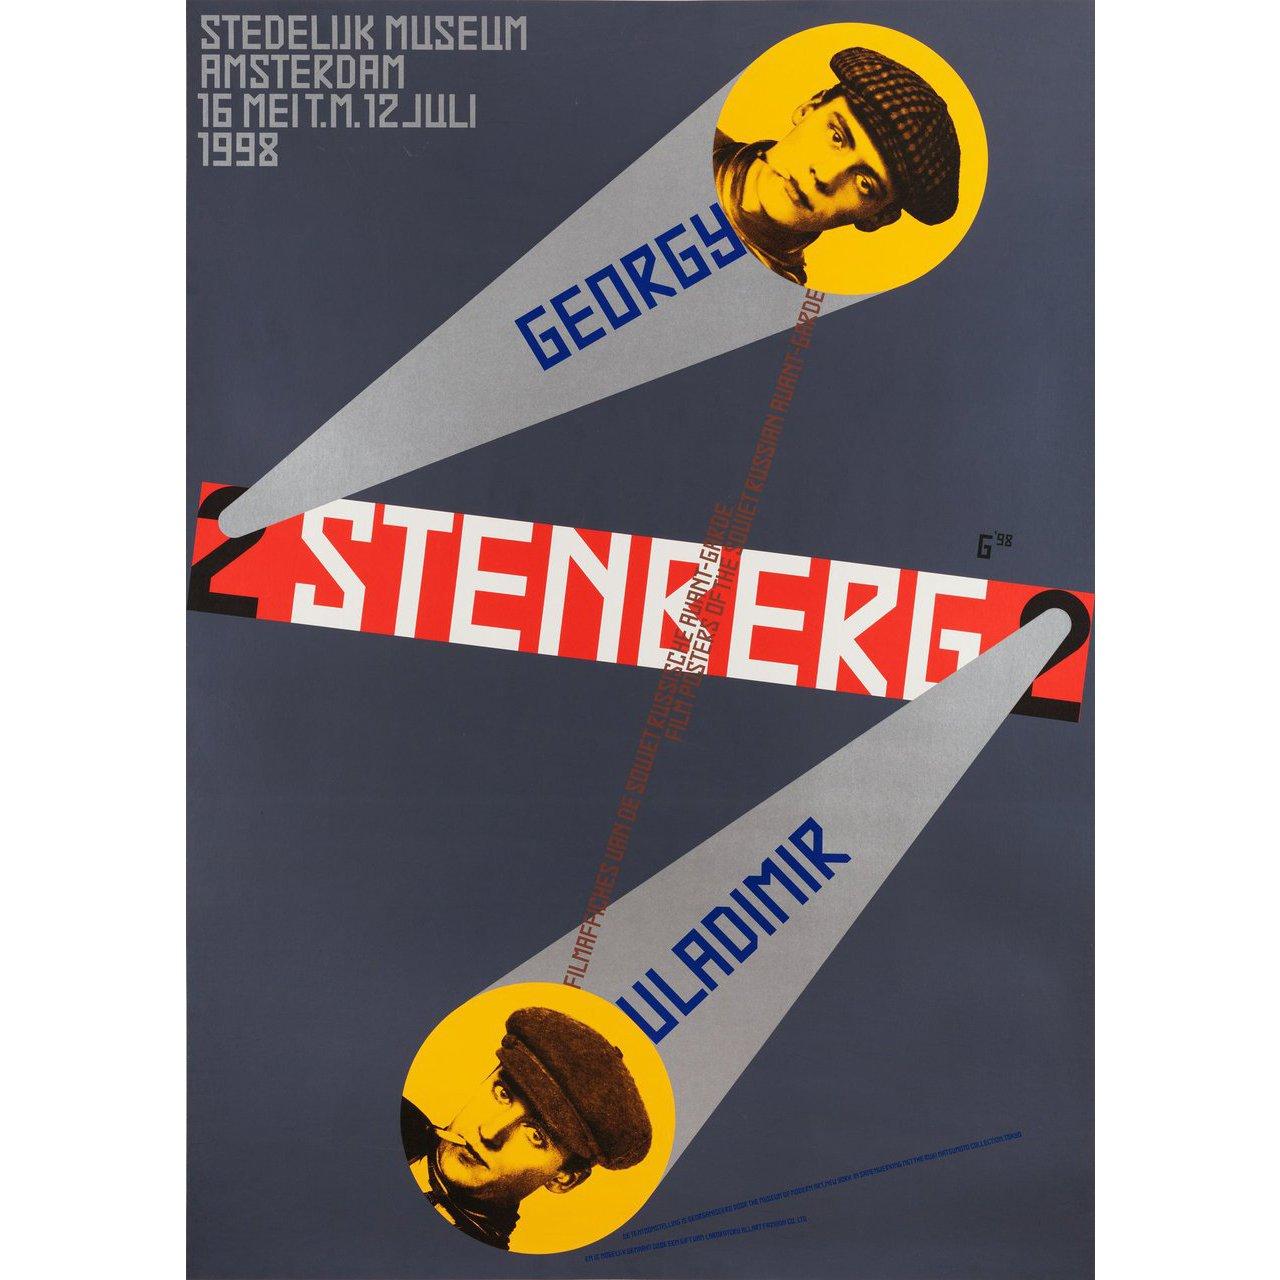 Paper Filmaffiches Van Gregory En Vladamir Stenberg 1998 Swiss Film Poster For Sale